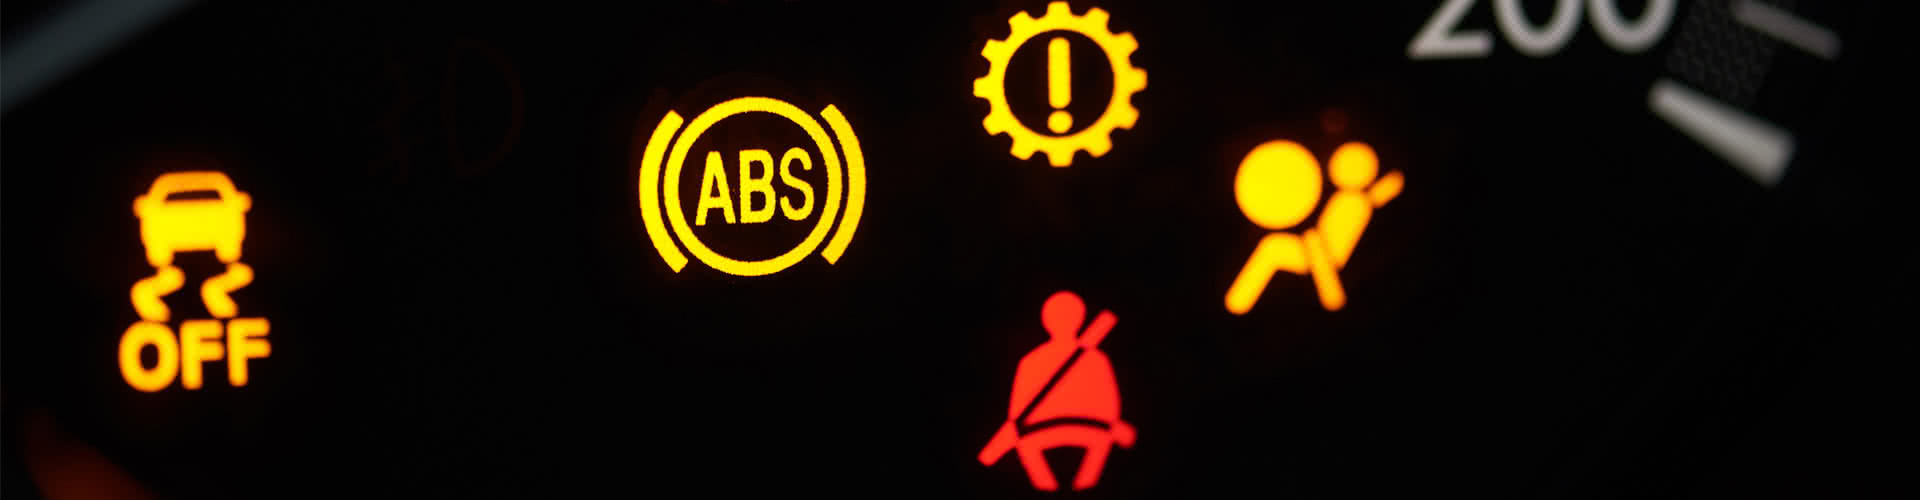 Understanding vehicle warning lights